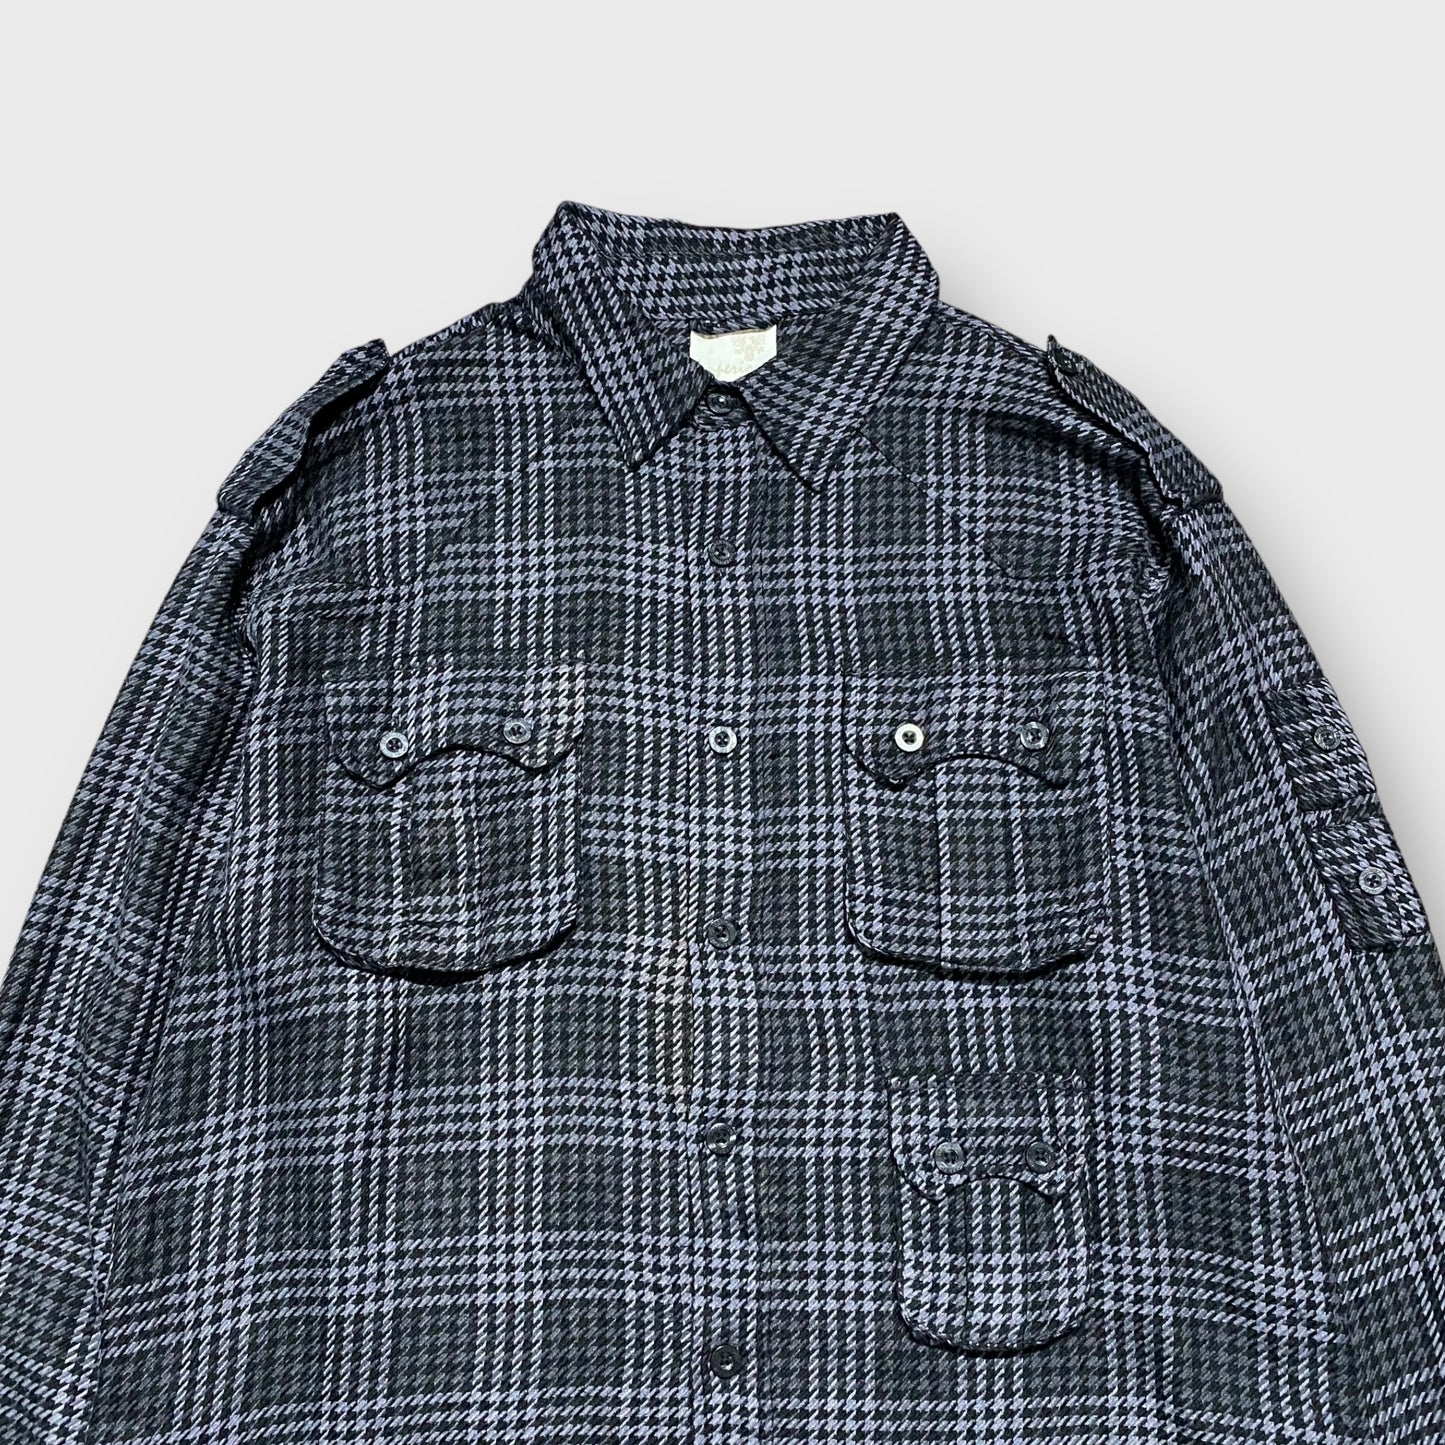 Houndstooth pattern multi pocket shirt jacket